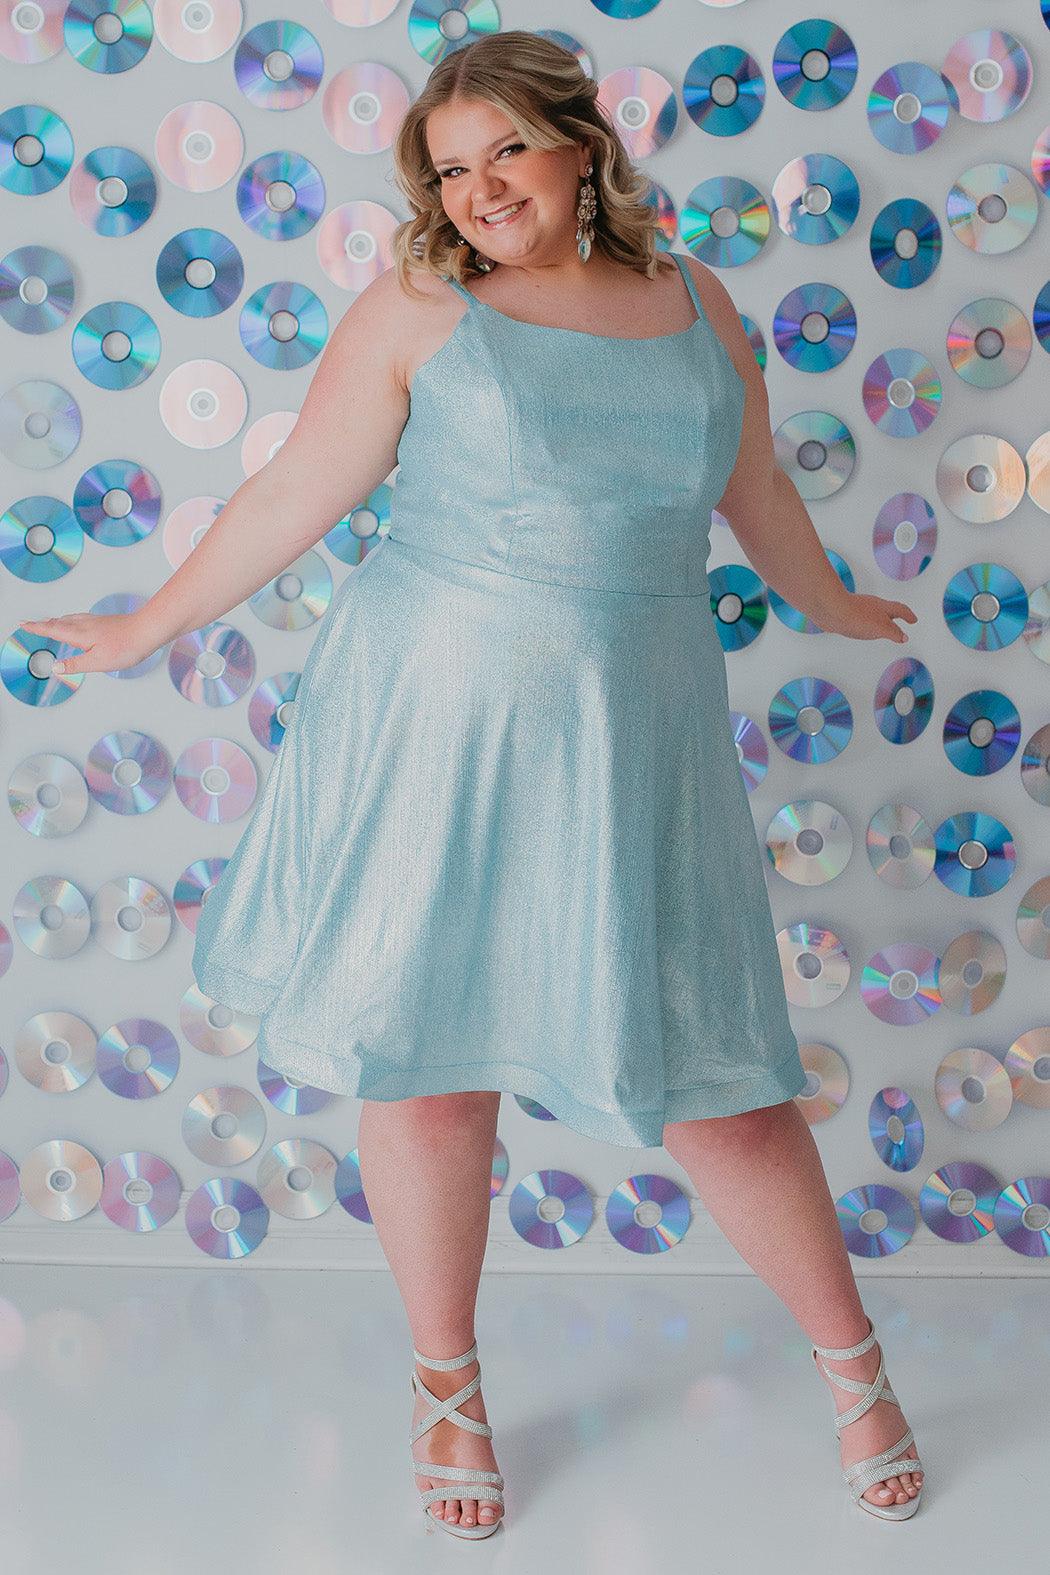 Prom Dresses Short Plus Size Homecoming Metallic Prom Dress Blue Ice